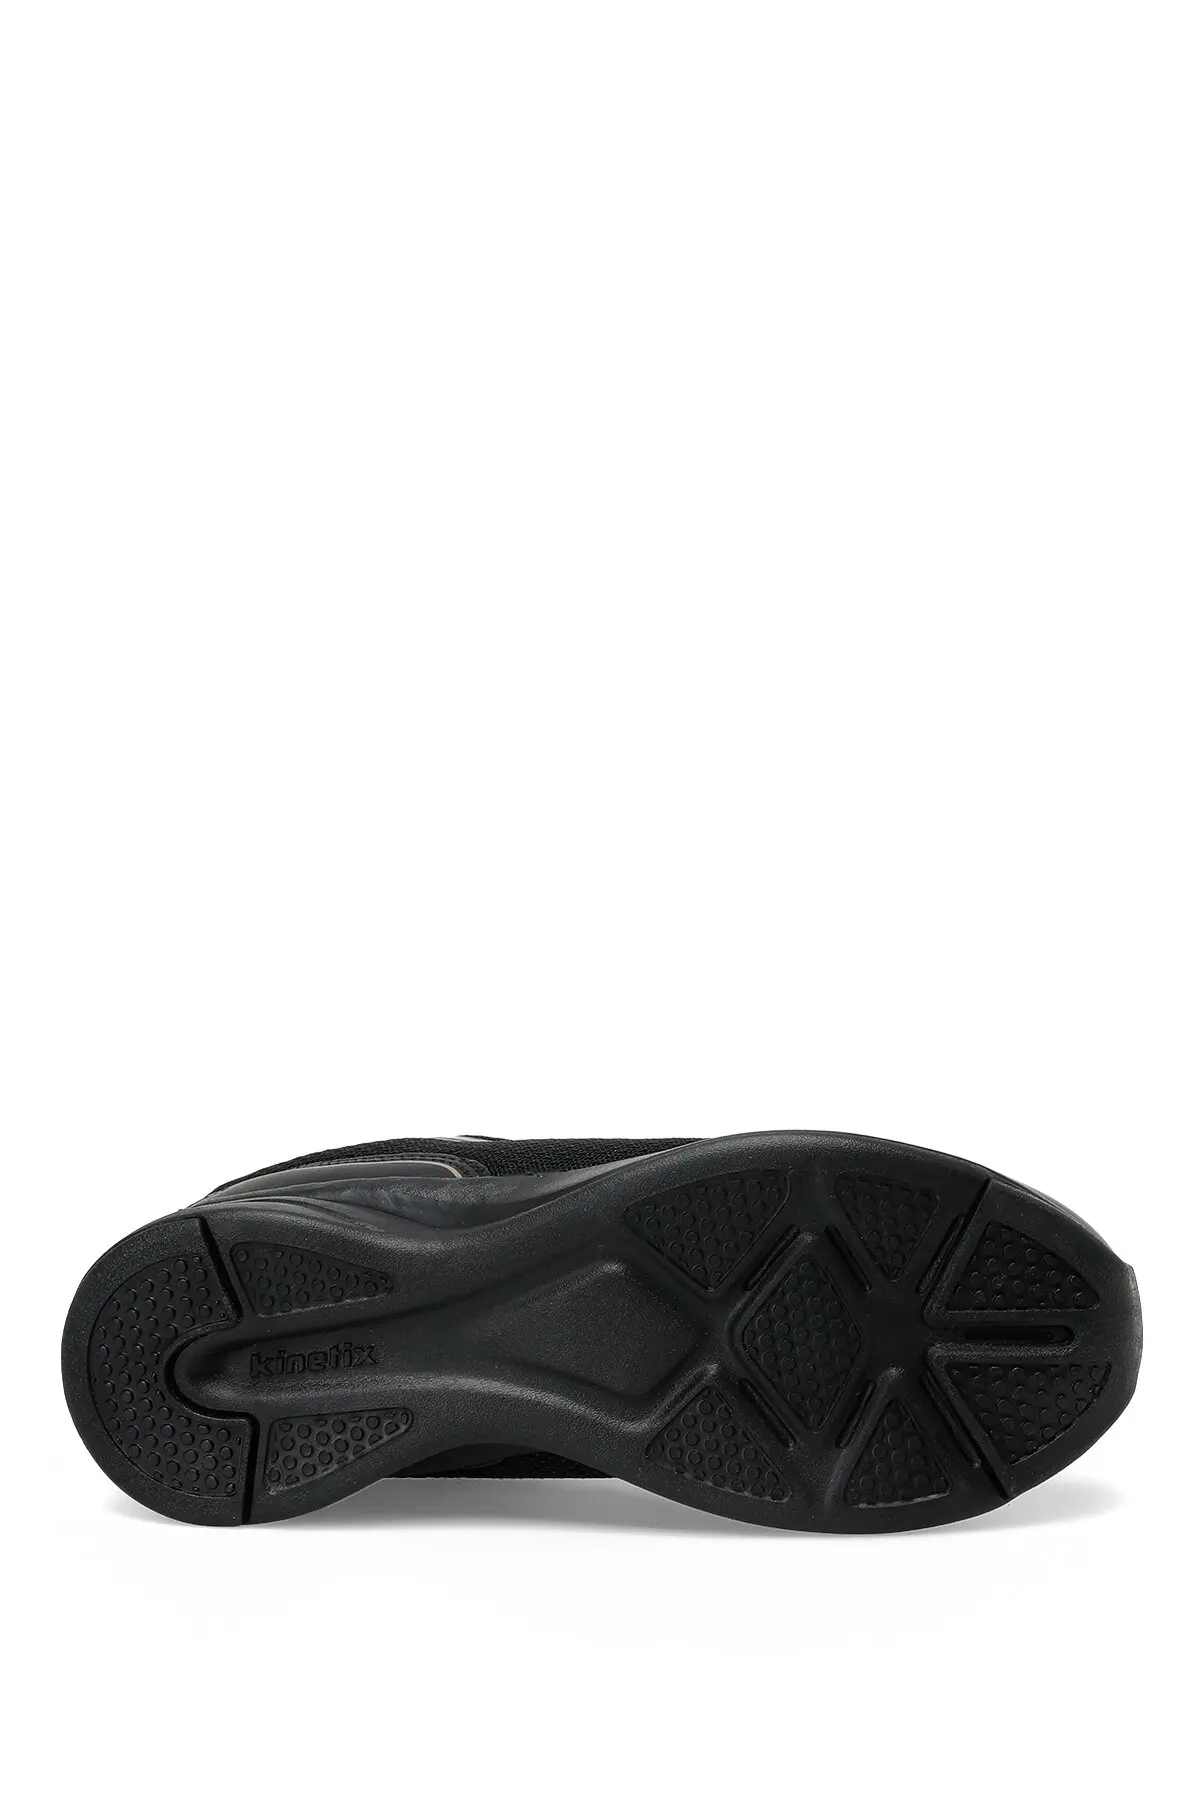 Kinetix DORA Women's Running Shoes Fashionable Odorless Antiperspirant Textile Comfortable Lightweight Marathon Sneaker images - 6